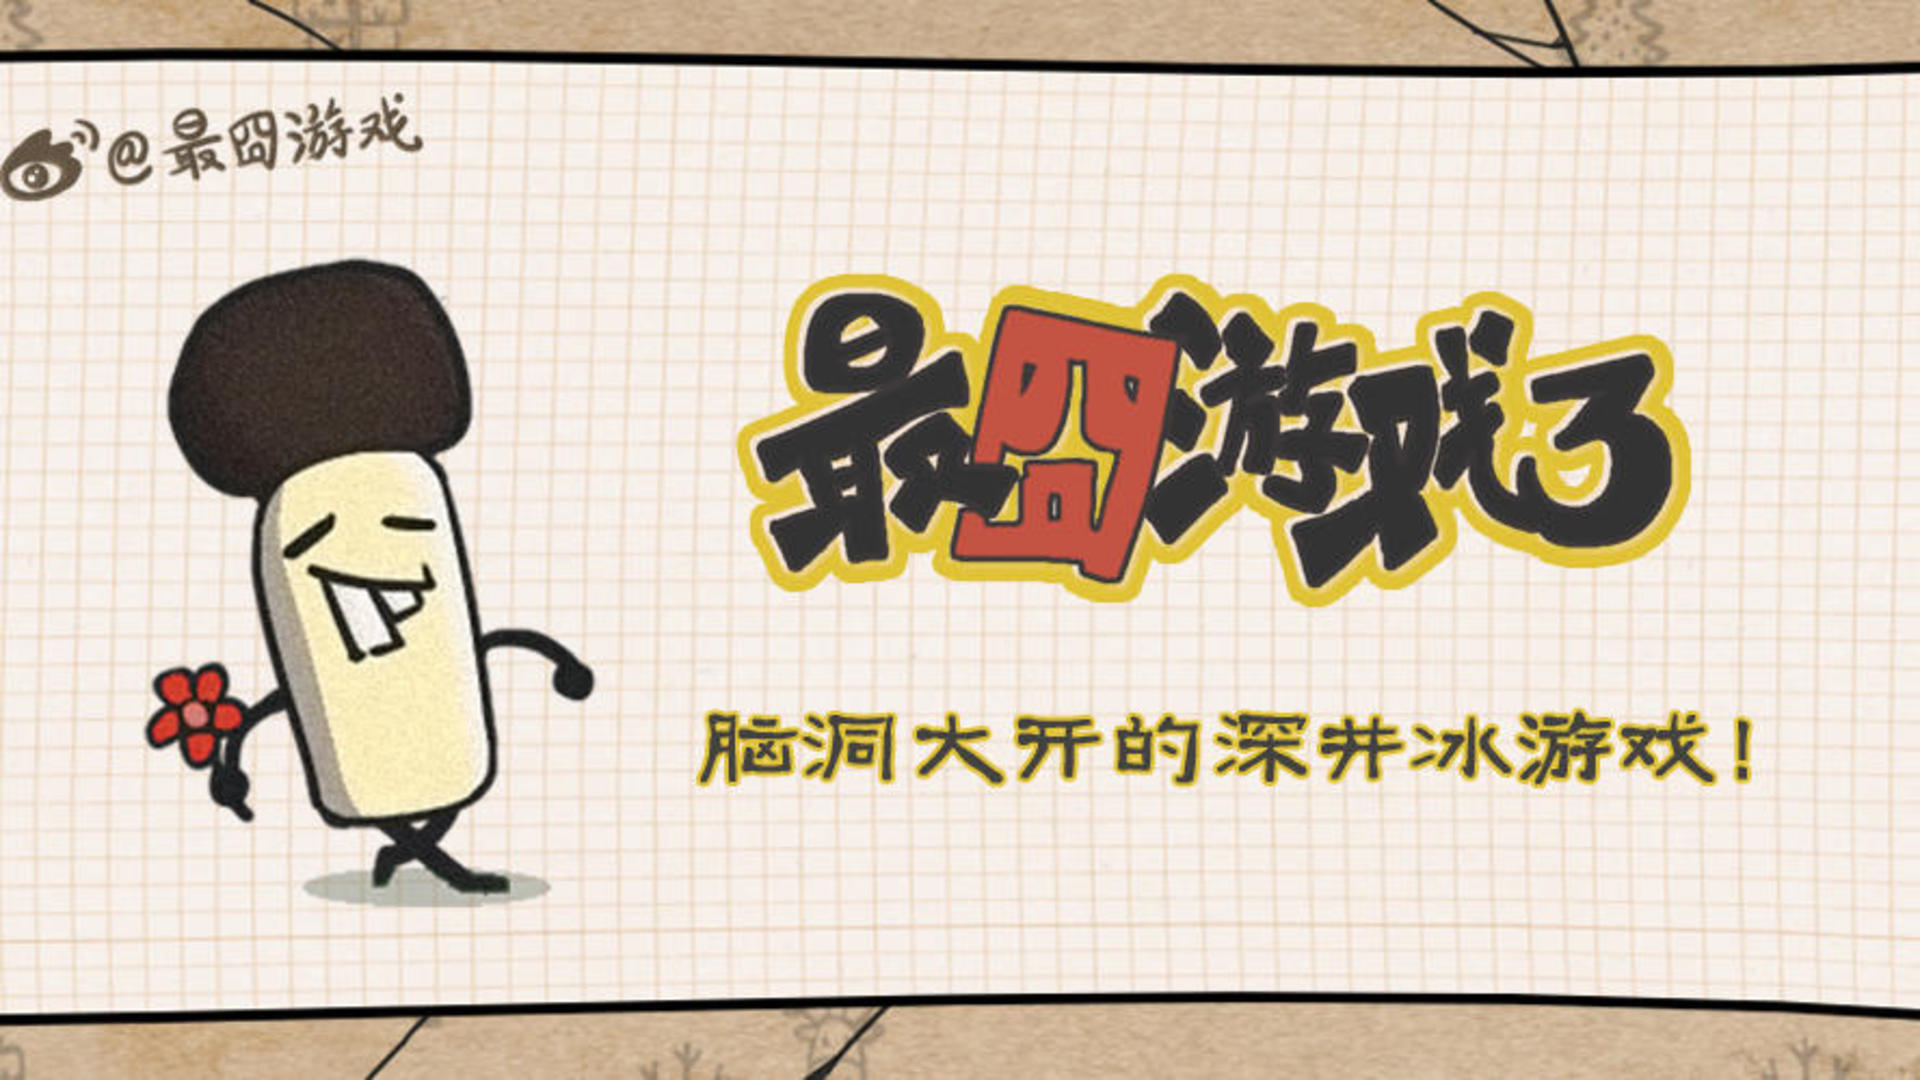 Banner of 最囧游戏3 